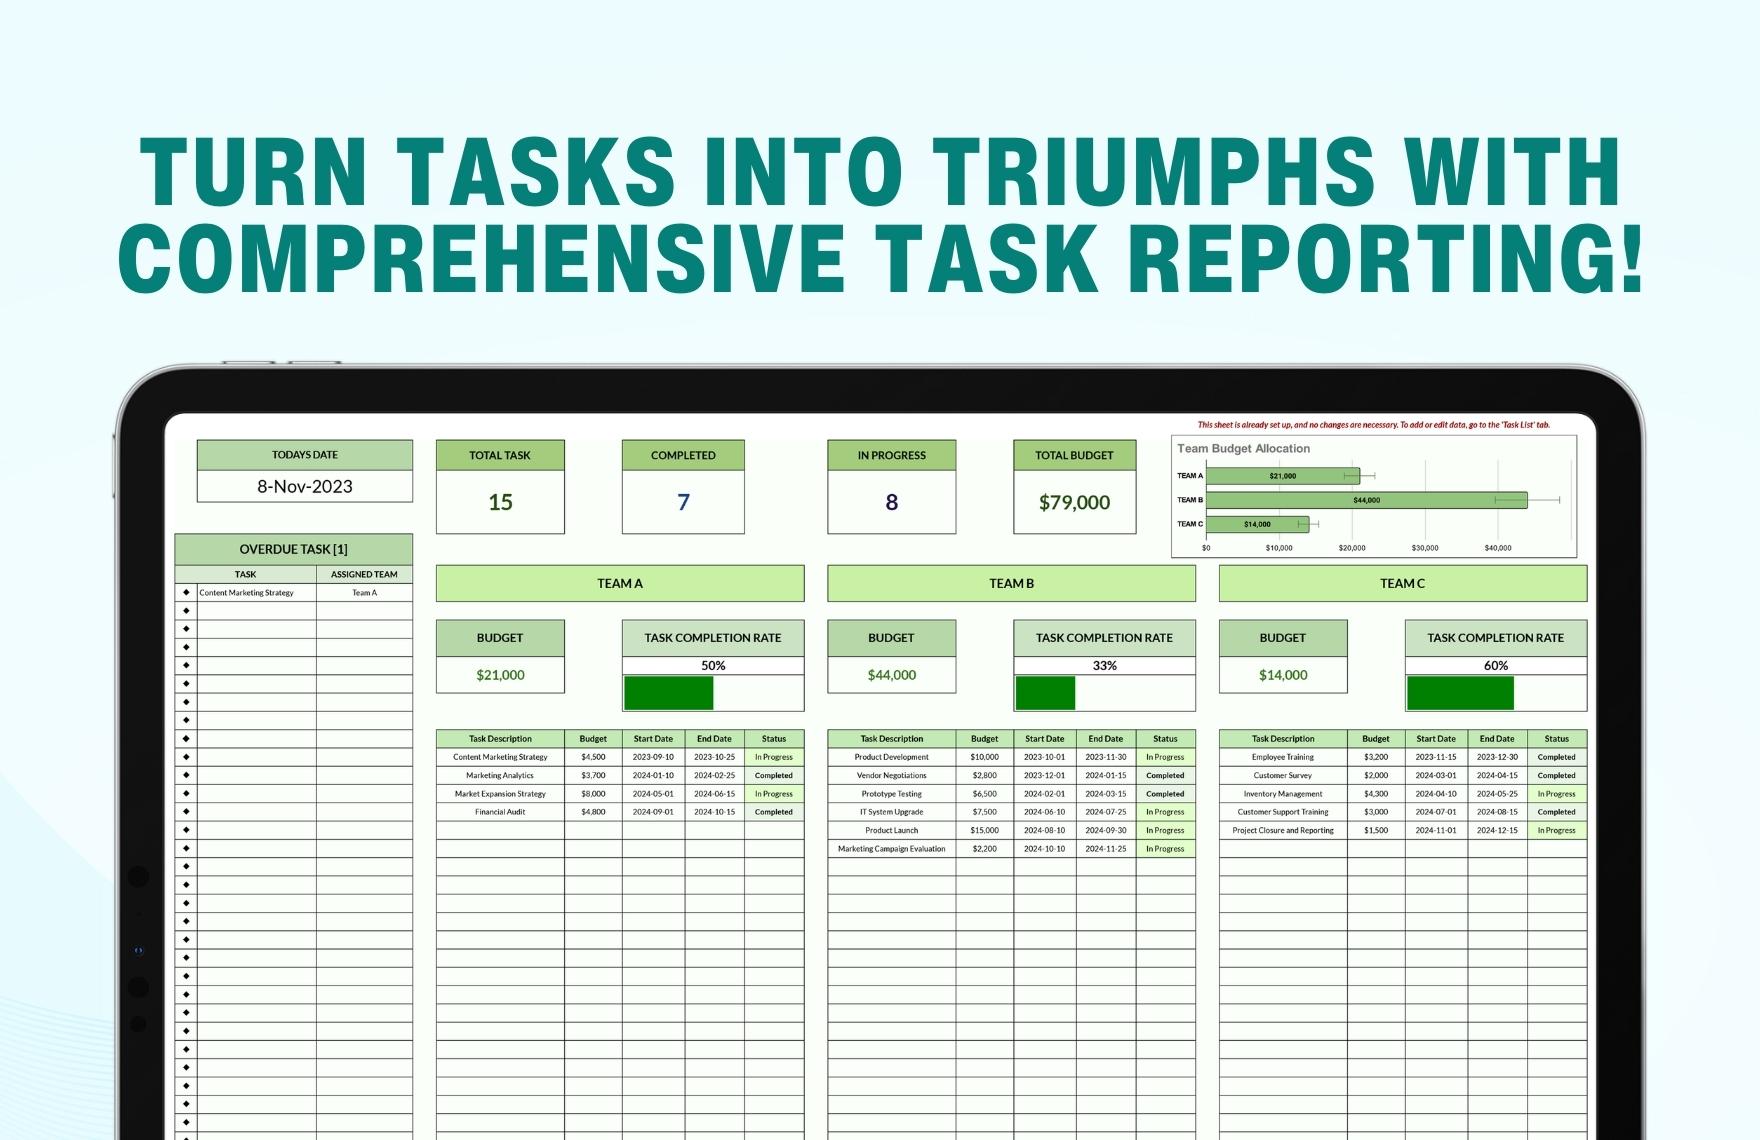 Task Report Template